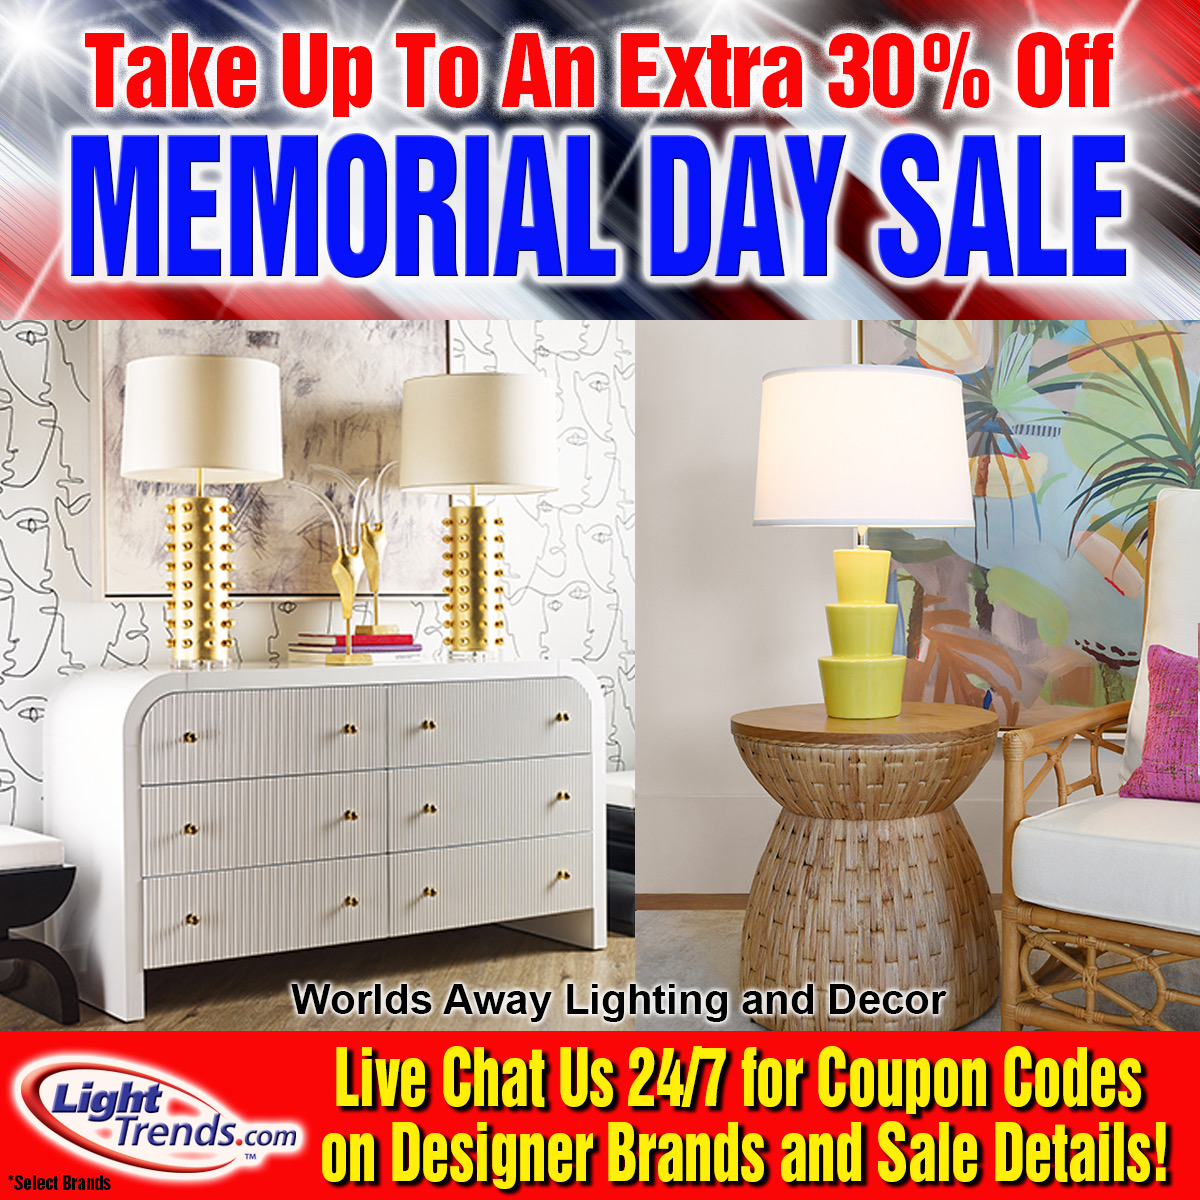 Save Up To 30% #sale #memorialday #memorialdaysale #memorialdaysales lighttrends.com